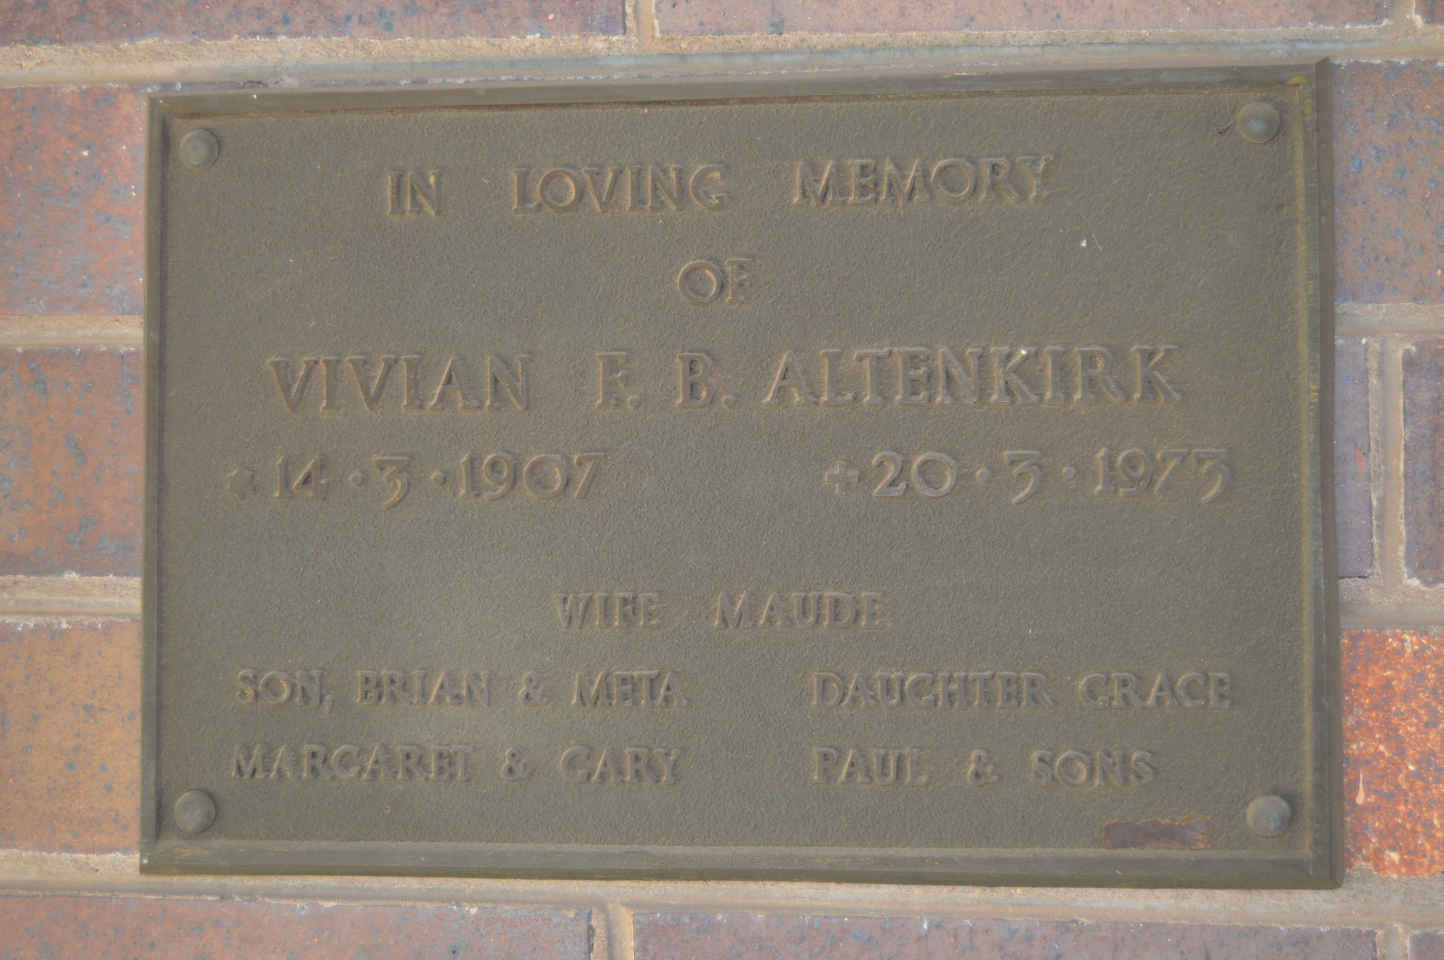 ALTENKIRK Vivian F.B. 1907-1973